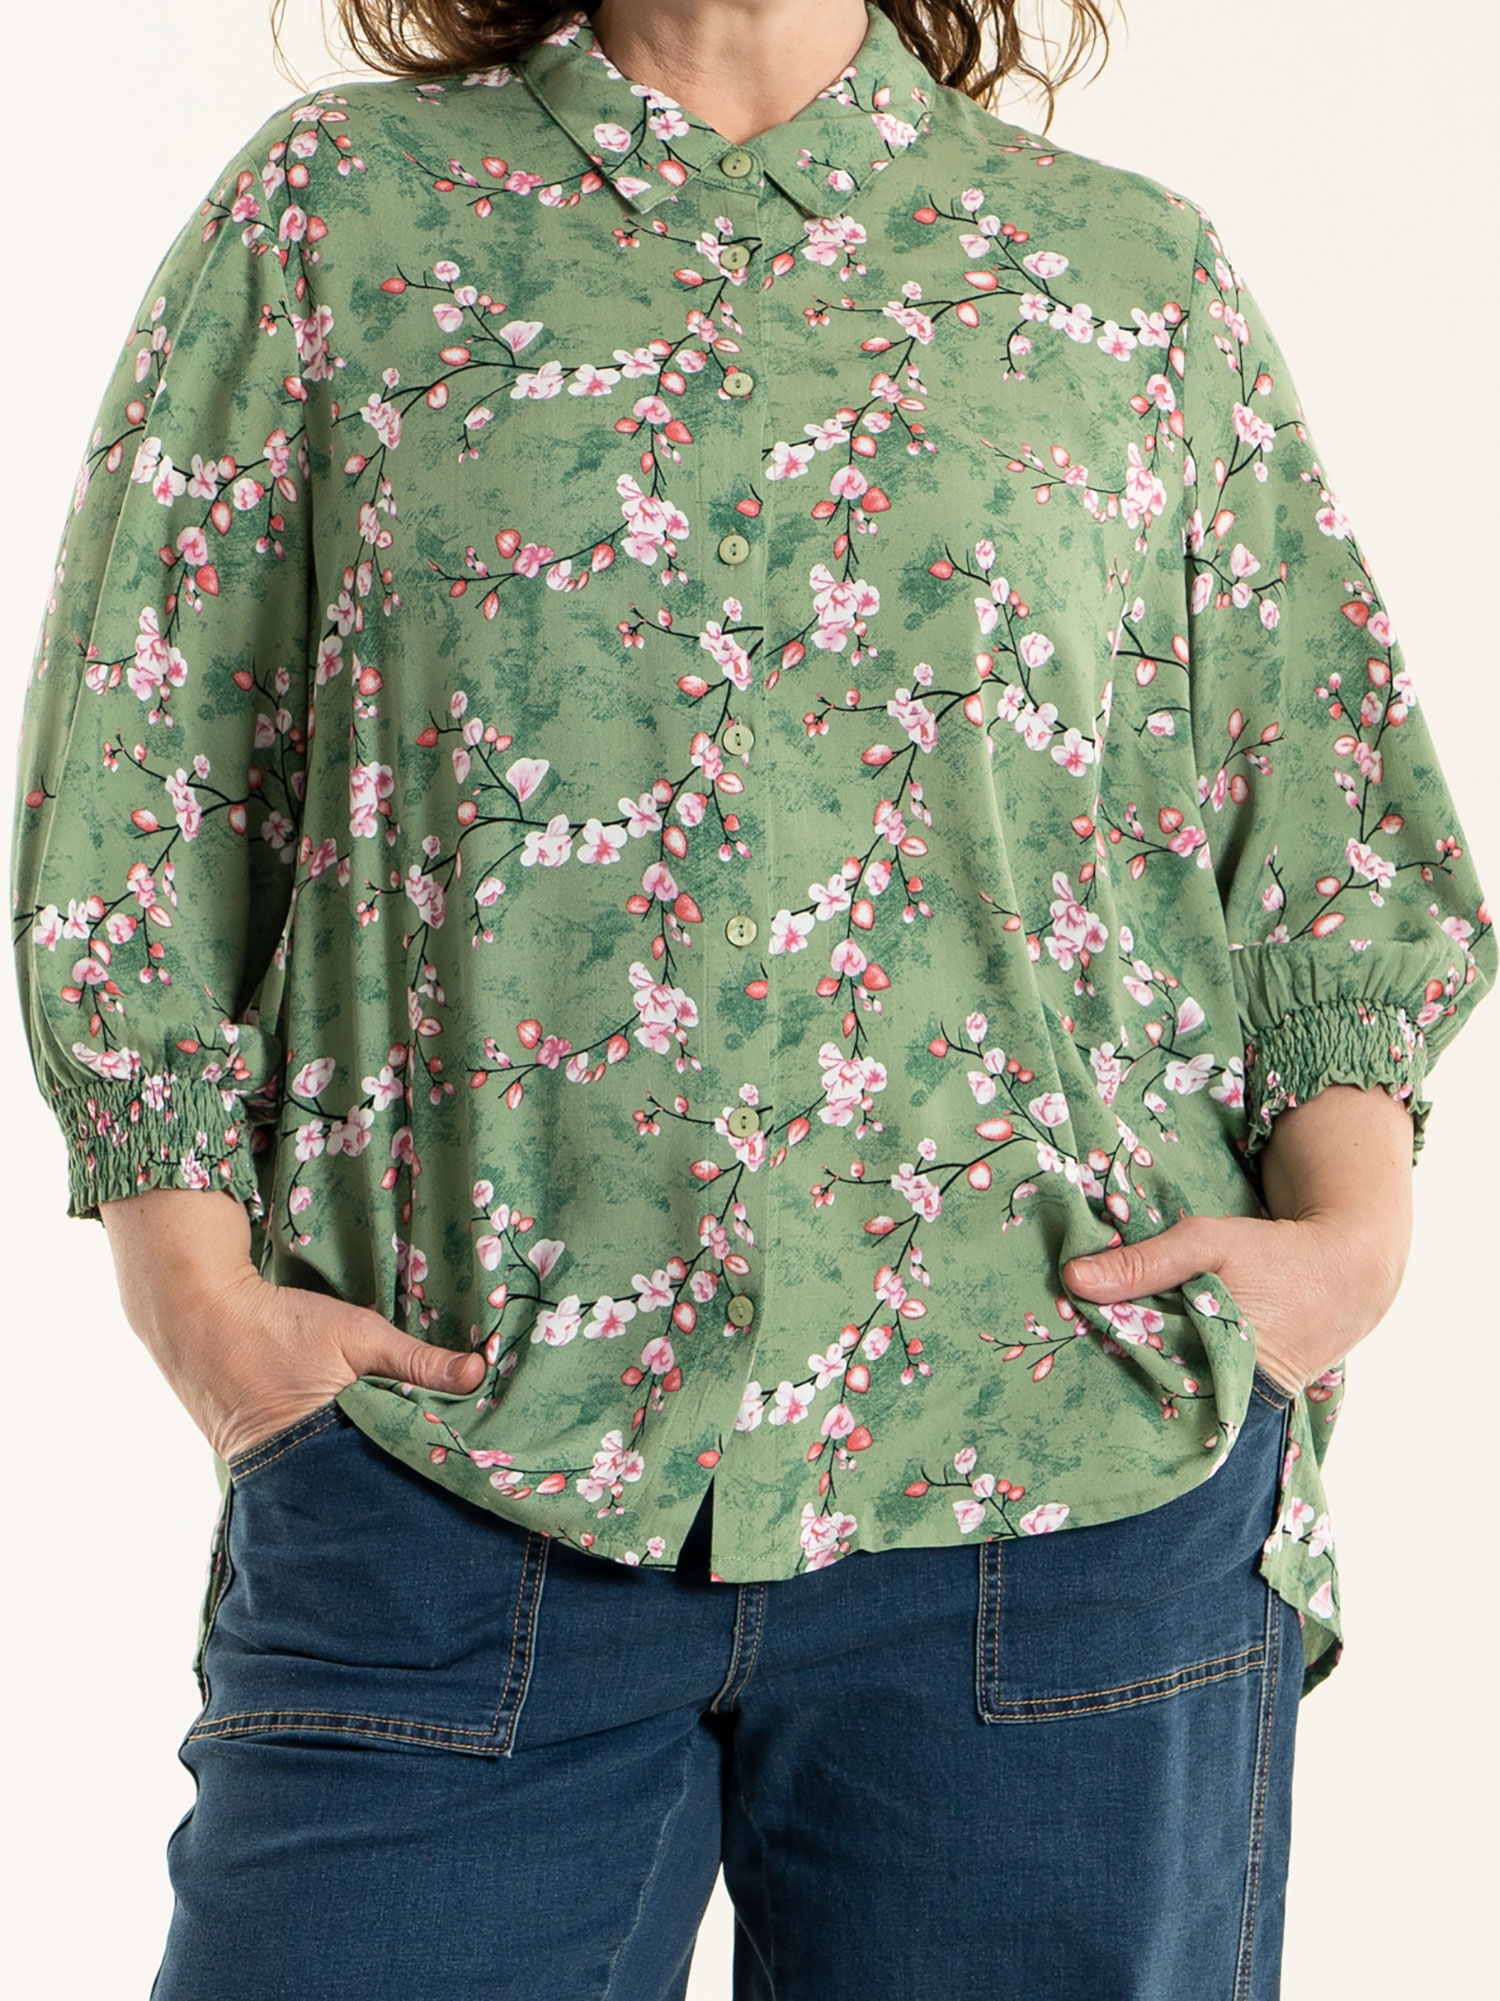 HARRIET - Grøn viskose skjorte bluse med blomster print fra Gozzip